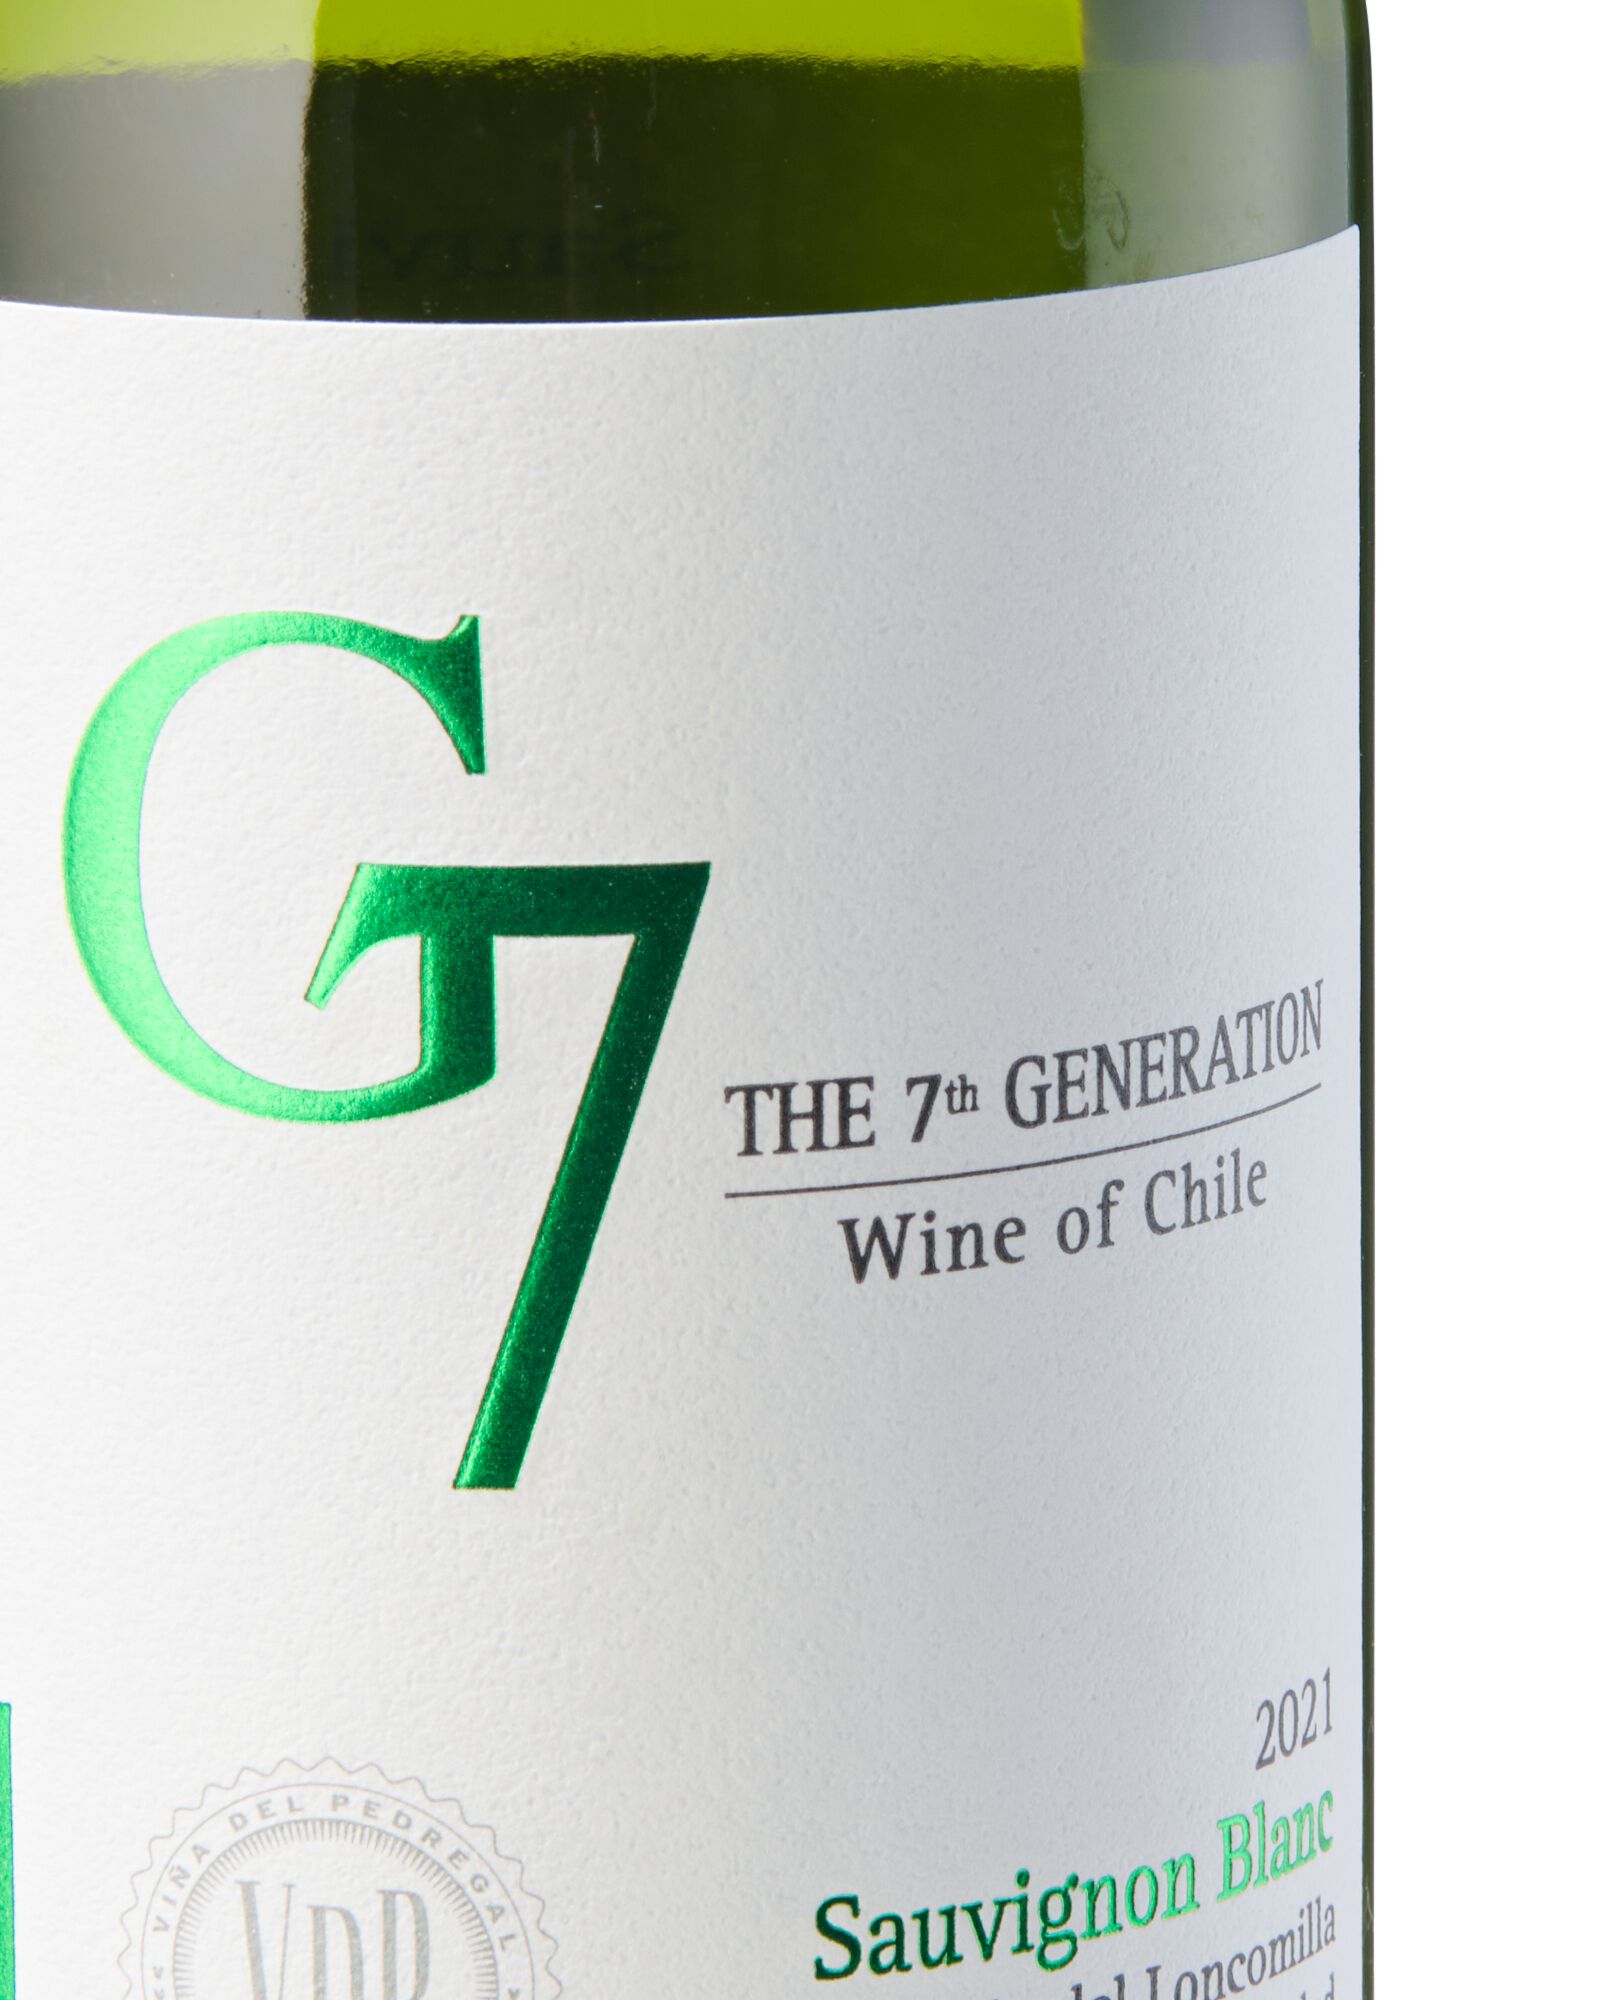 G7 sauvignon blanc - wit - 17371106 - HEMA